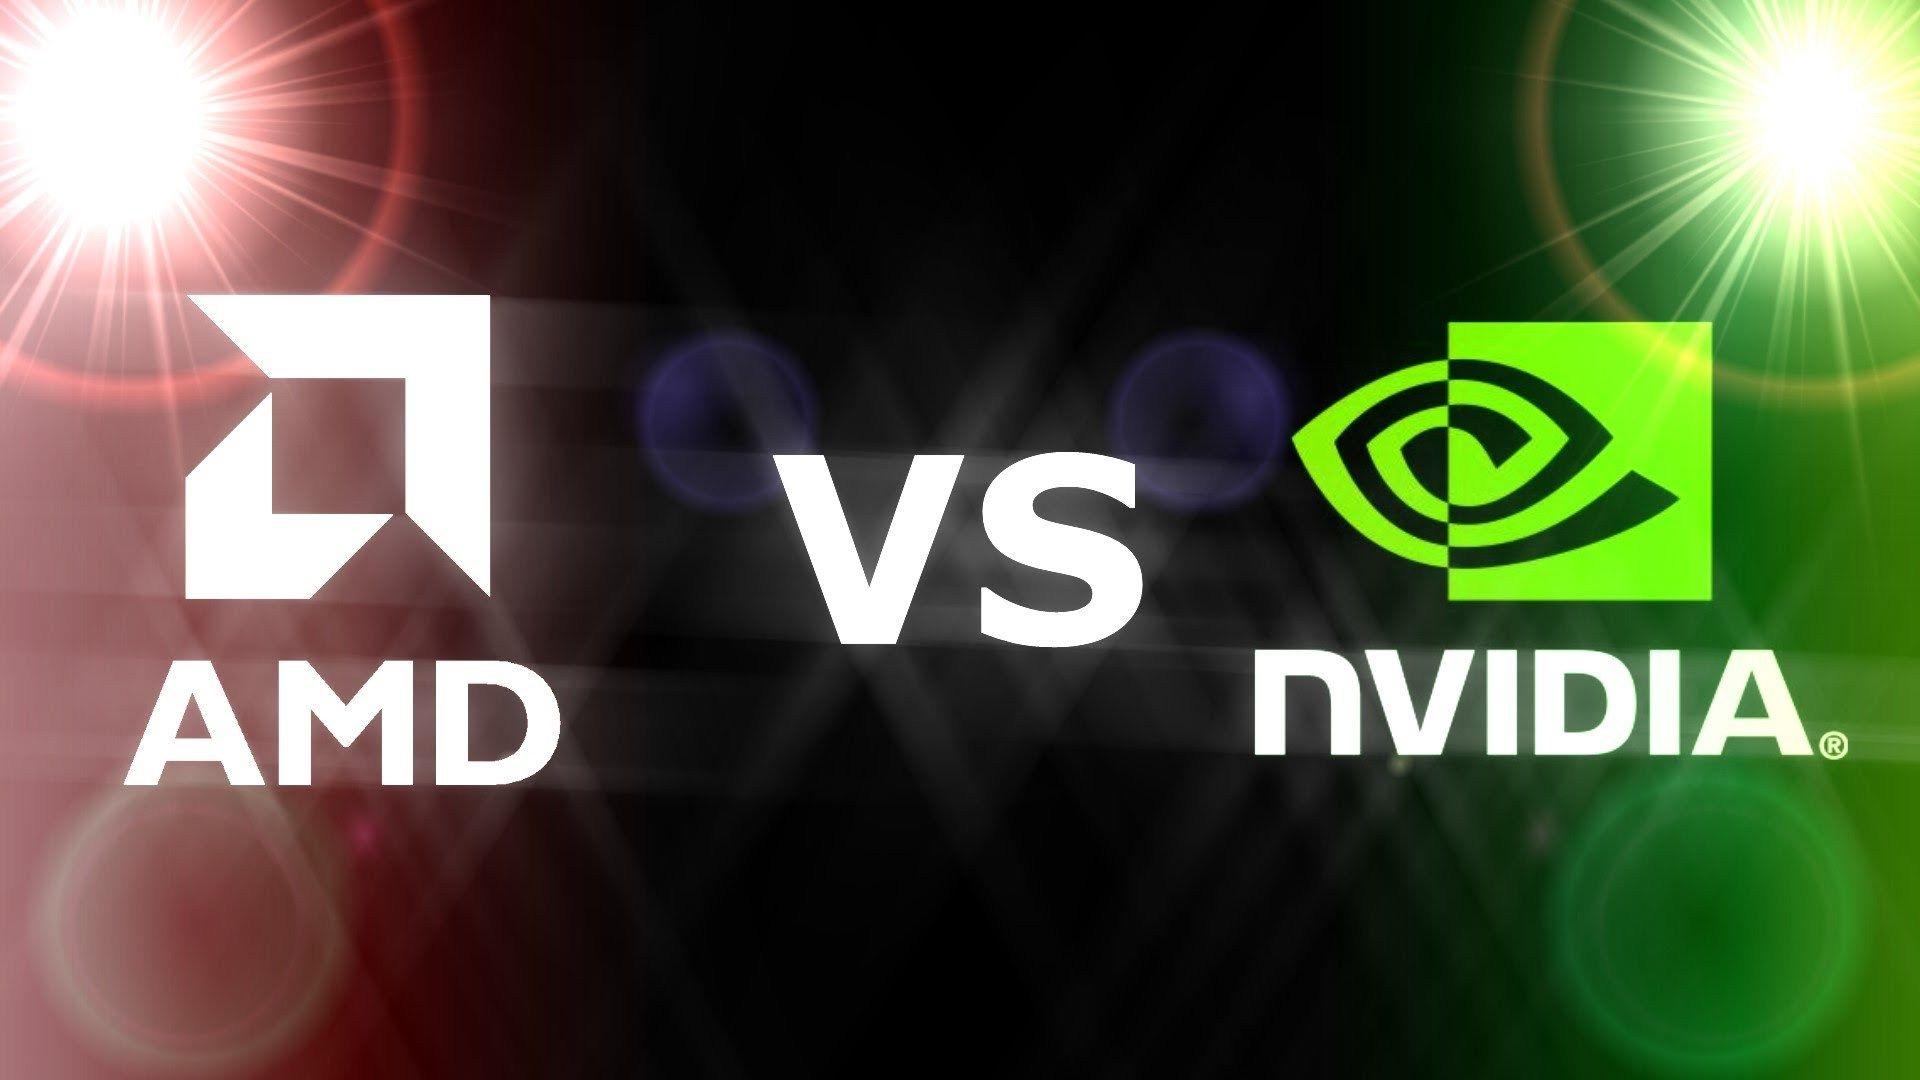 AMD Radeon RX Vega 10 vs NVIDIA GeForce GTX 1050 (4GB GDDR5)